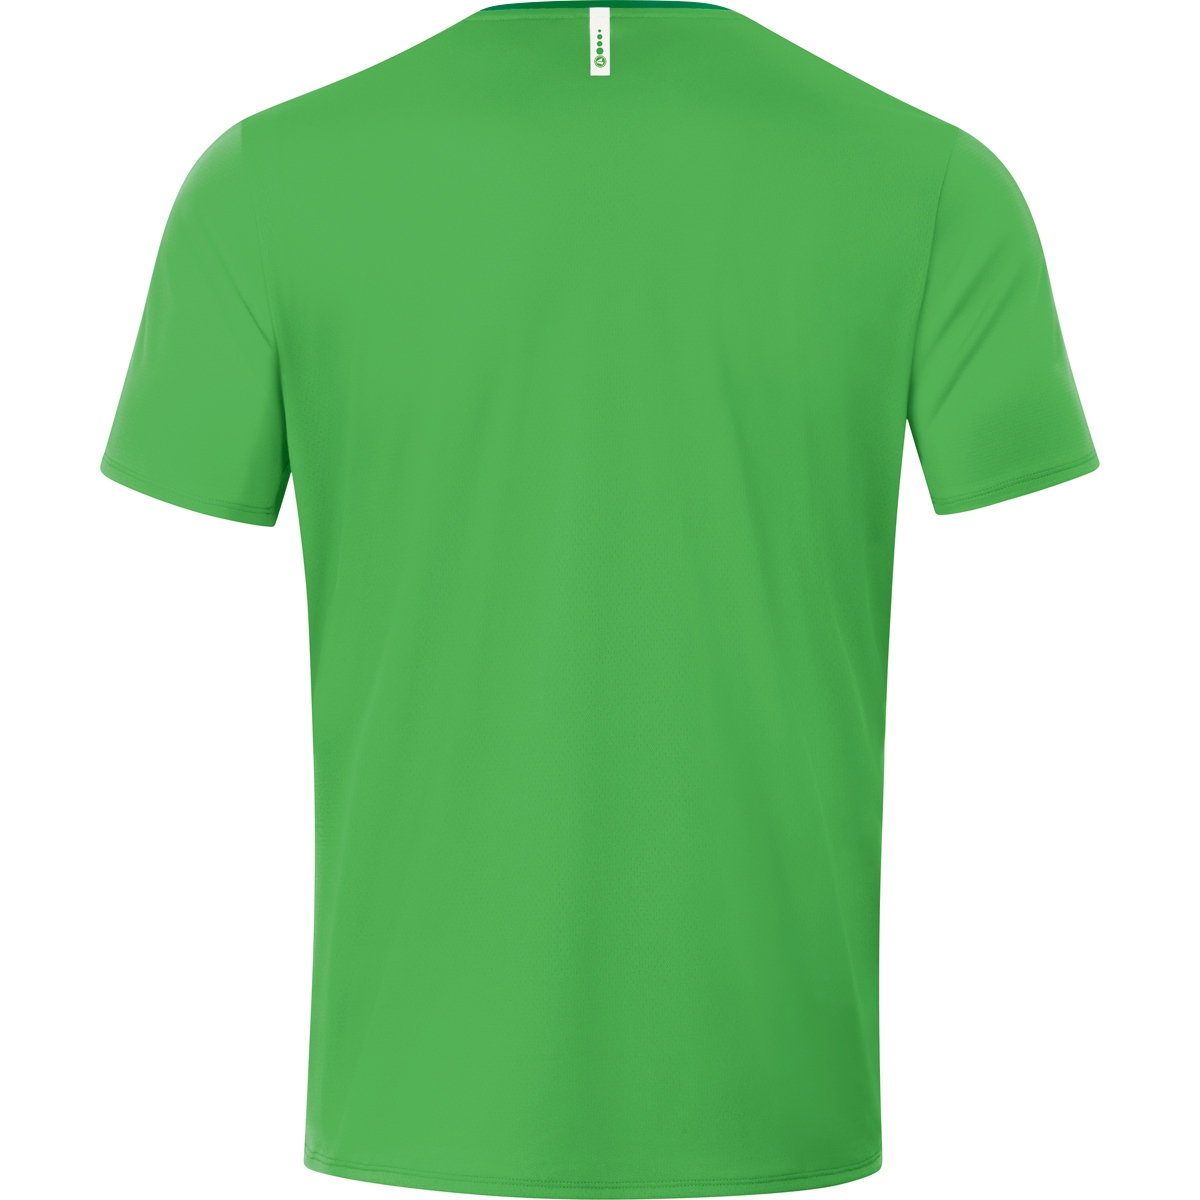 JAKO T-Shirt 2.0 green/sportgrün, Herren, Champ Gr. soft M, 6120